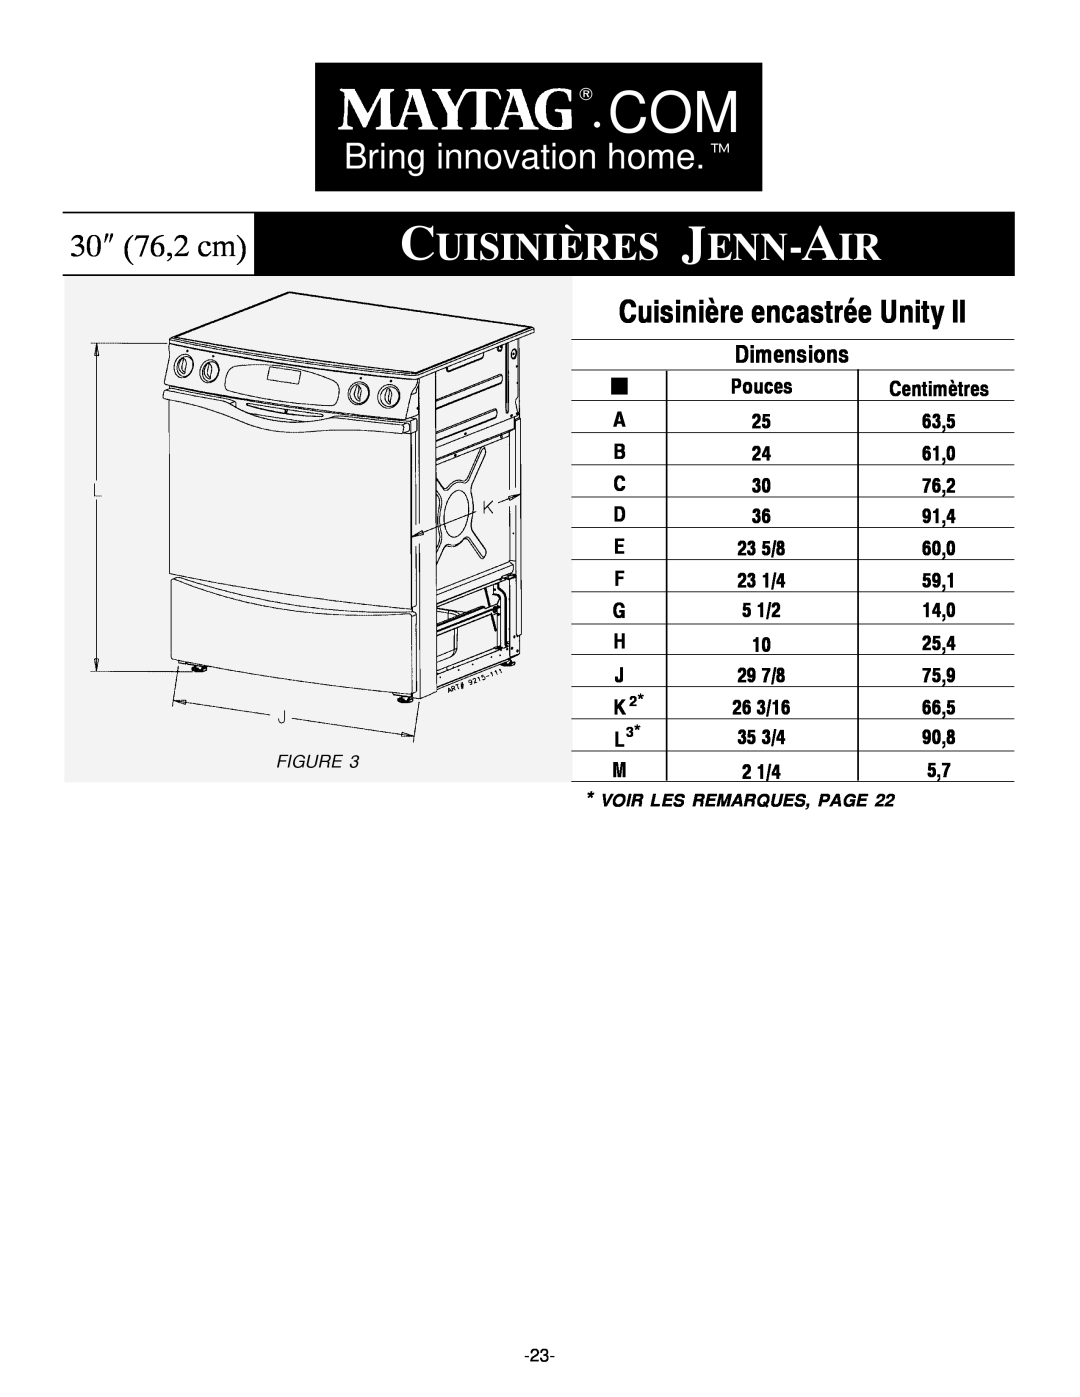 Jenn-Air Range Dimensions, Cuisinières Jenn-Air, Bring innovation home.t, 30 76,2 cm, Cuisinière encastrée Unity 